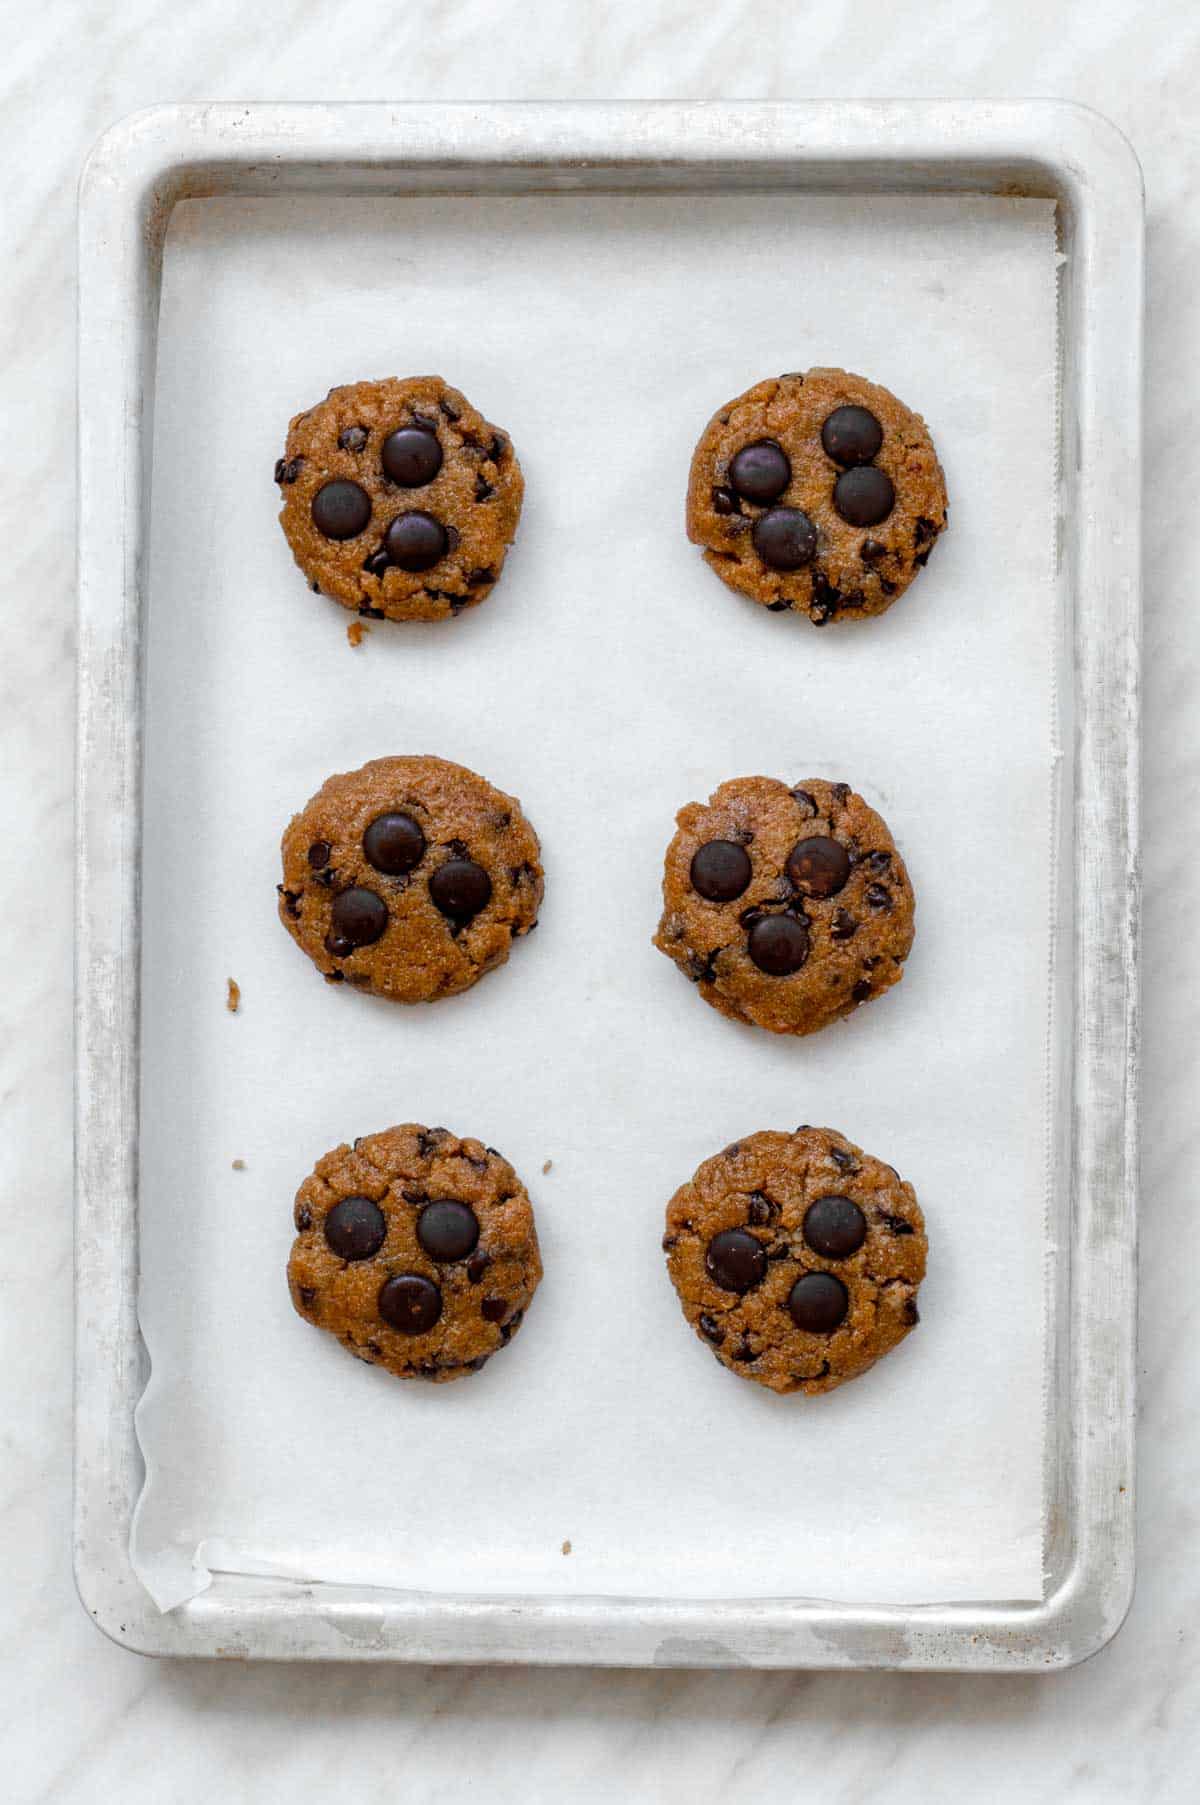 Six cookie dough balls placed on a baking sheet.